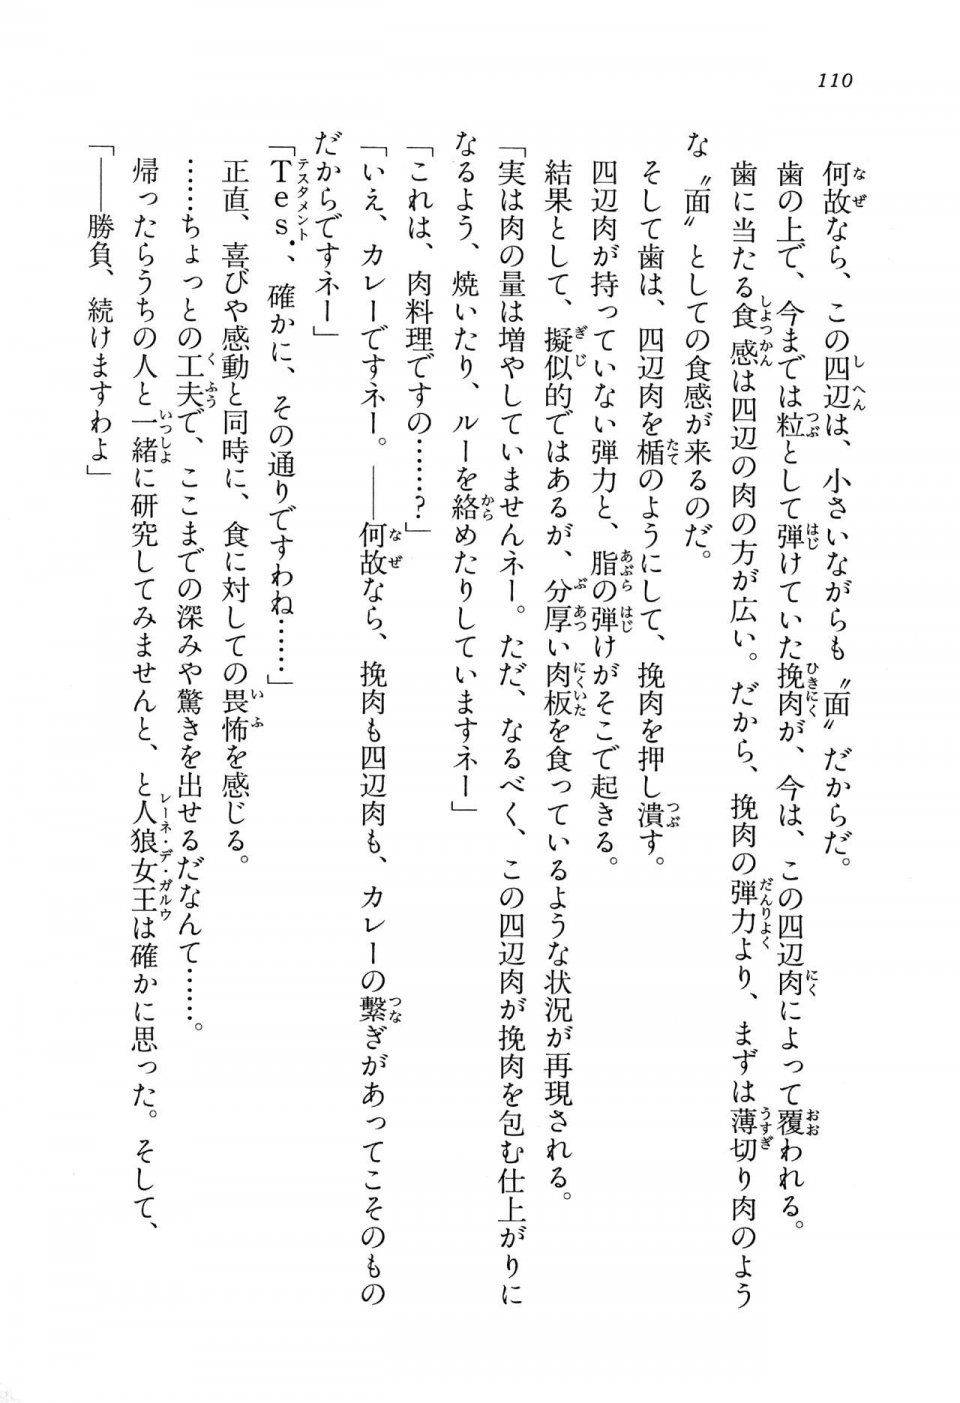 Kyoukai Senjou no Horizon LN Vol 15(6C) Part 1 - Photo #110